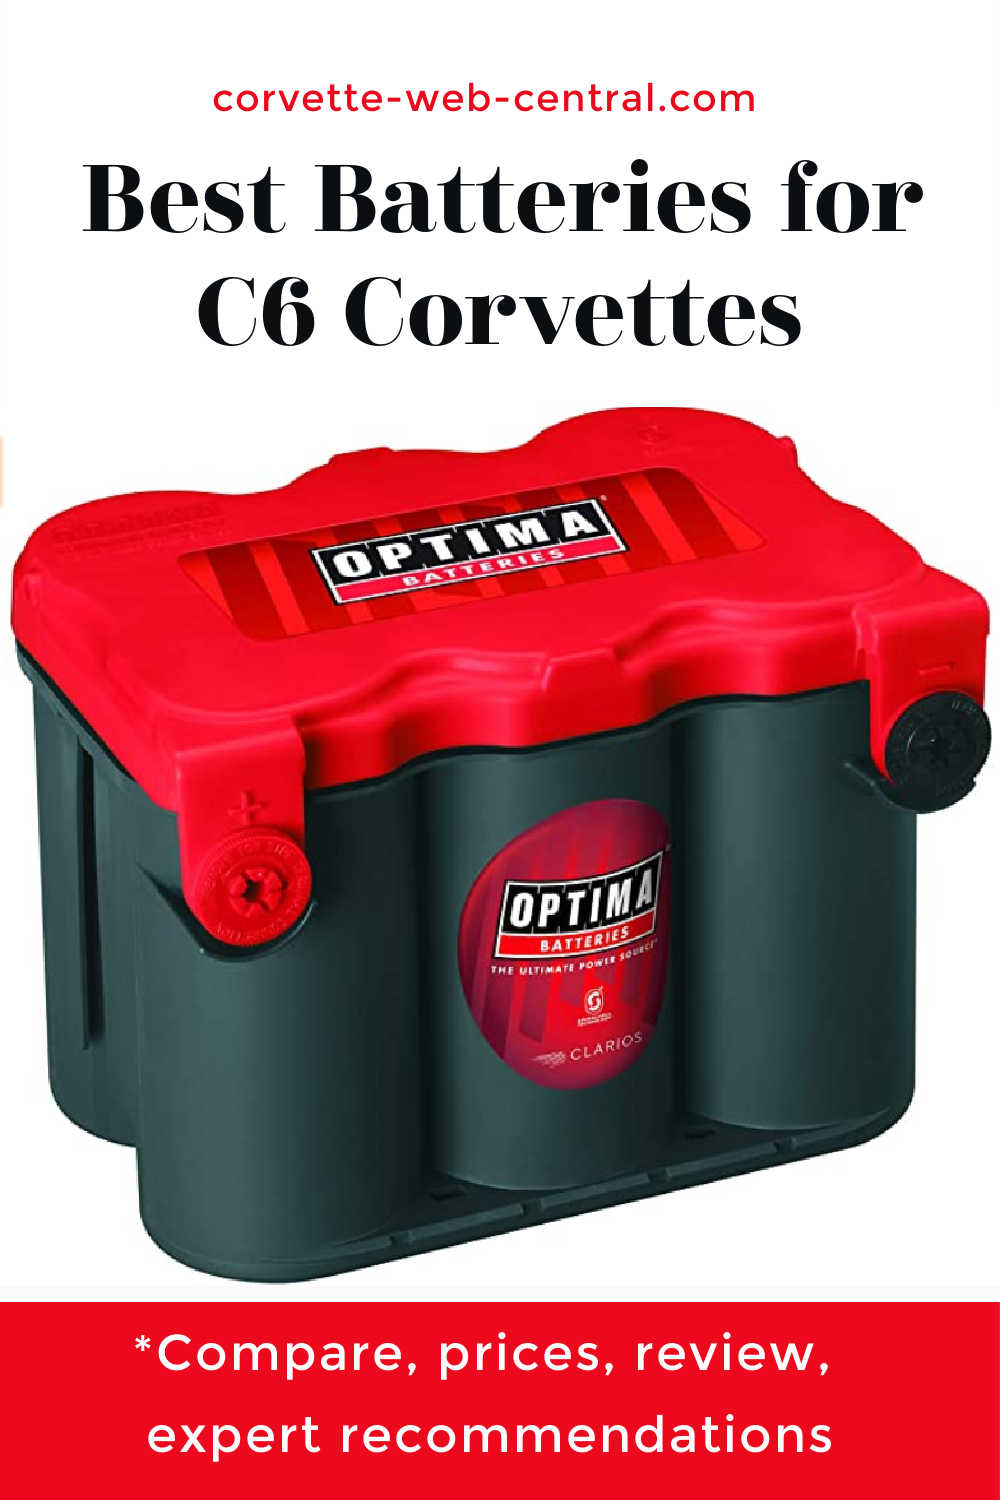 www.corvette-web-central.com